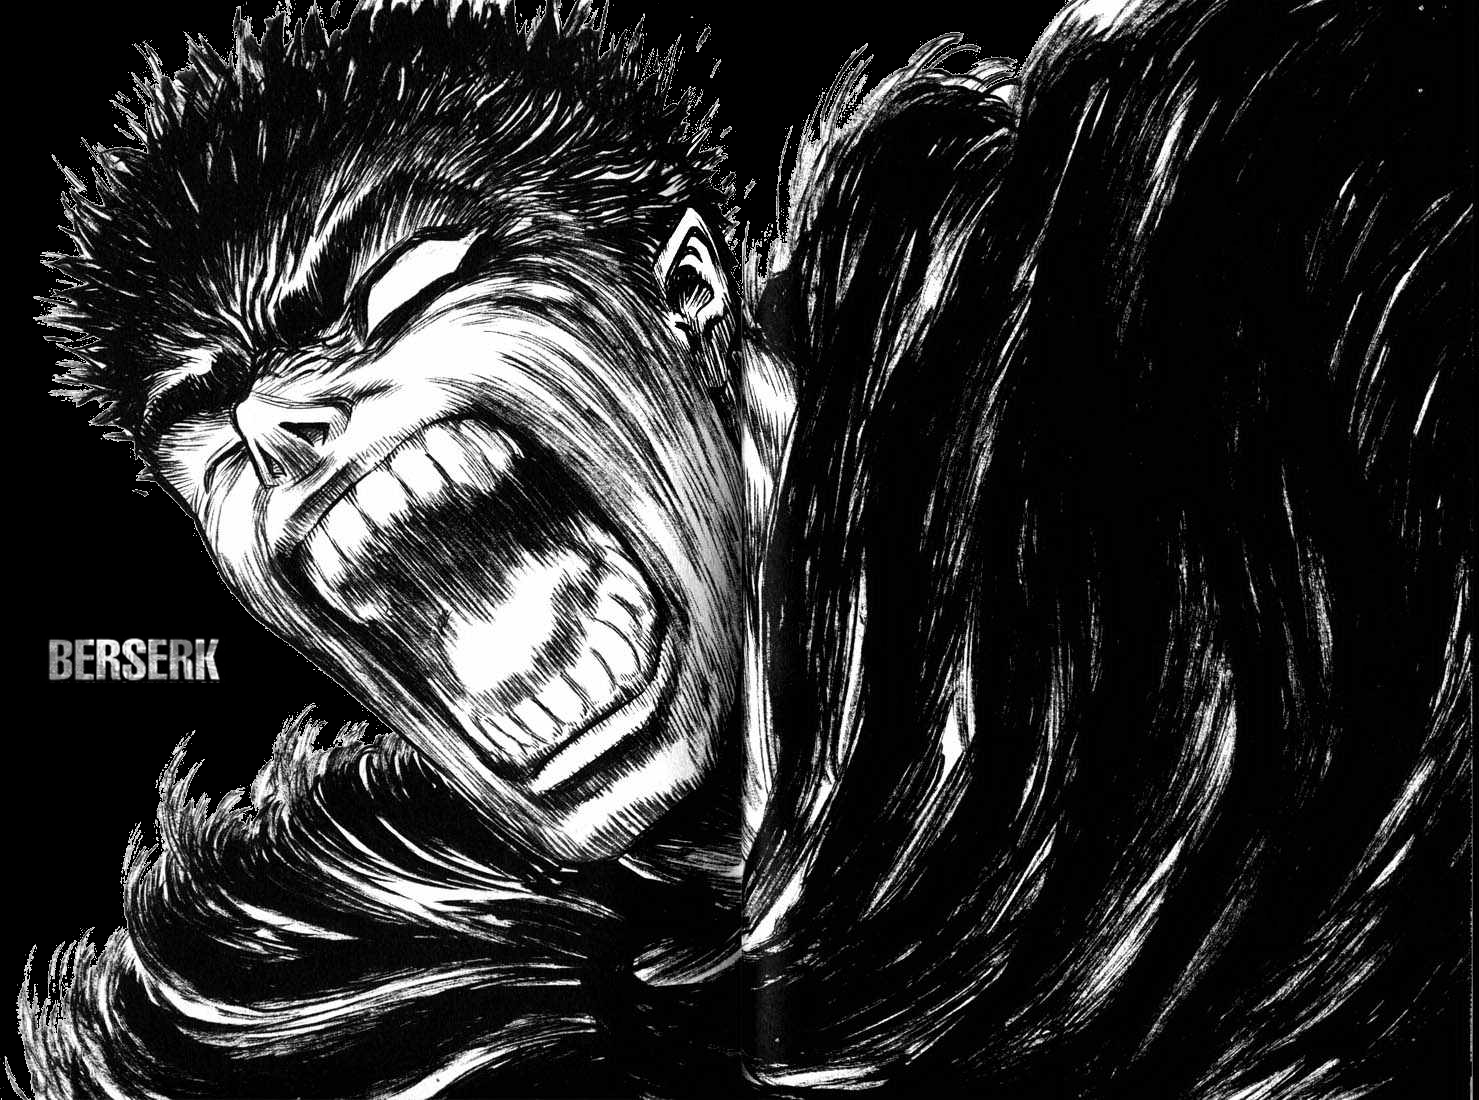 Berserk Guts Manga wallpaper   ForWallpapercom